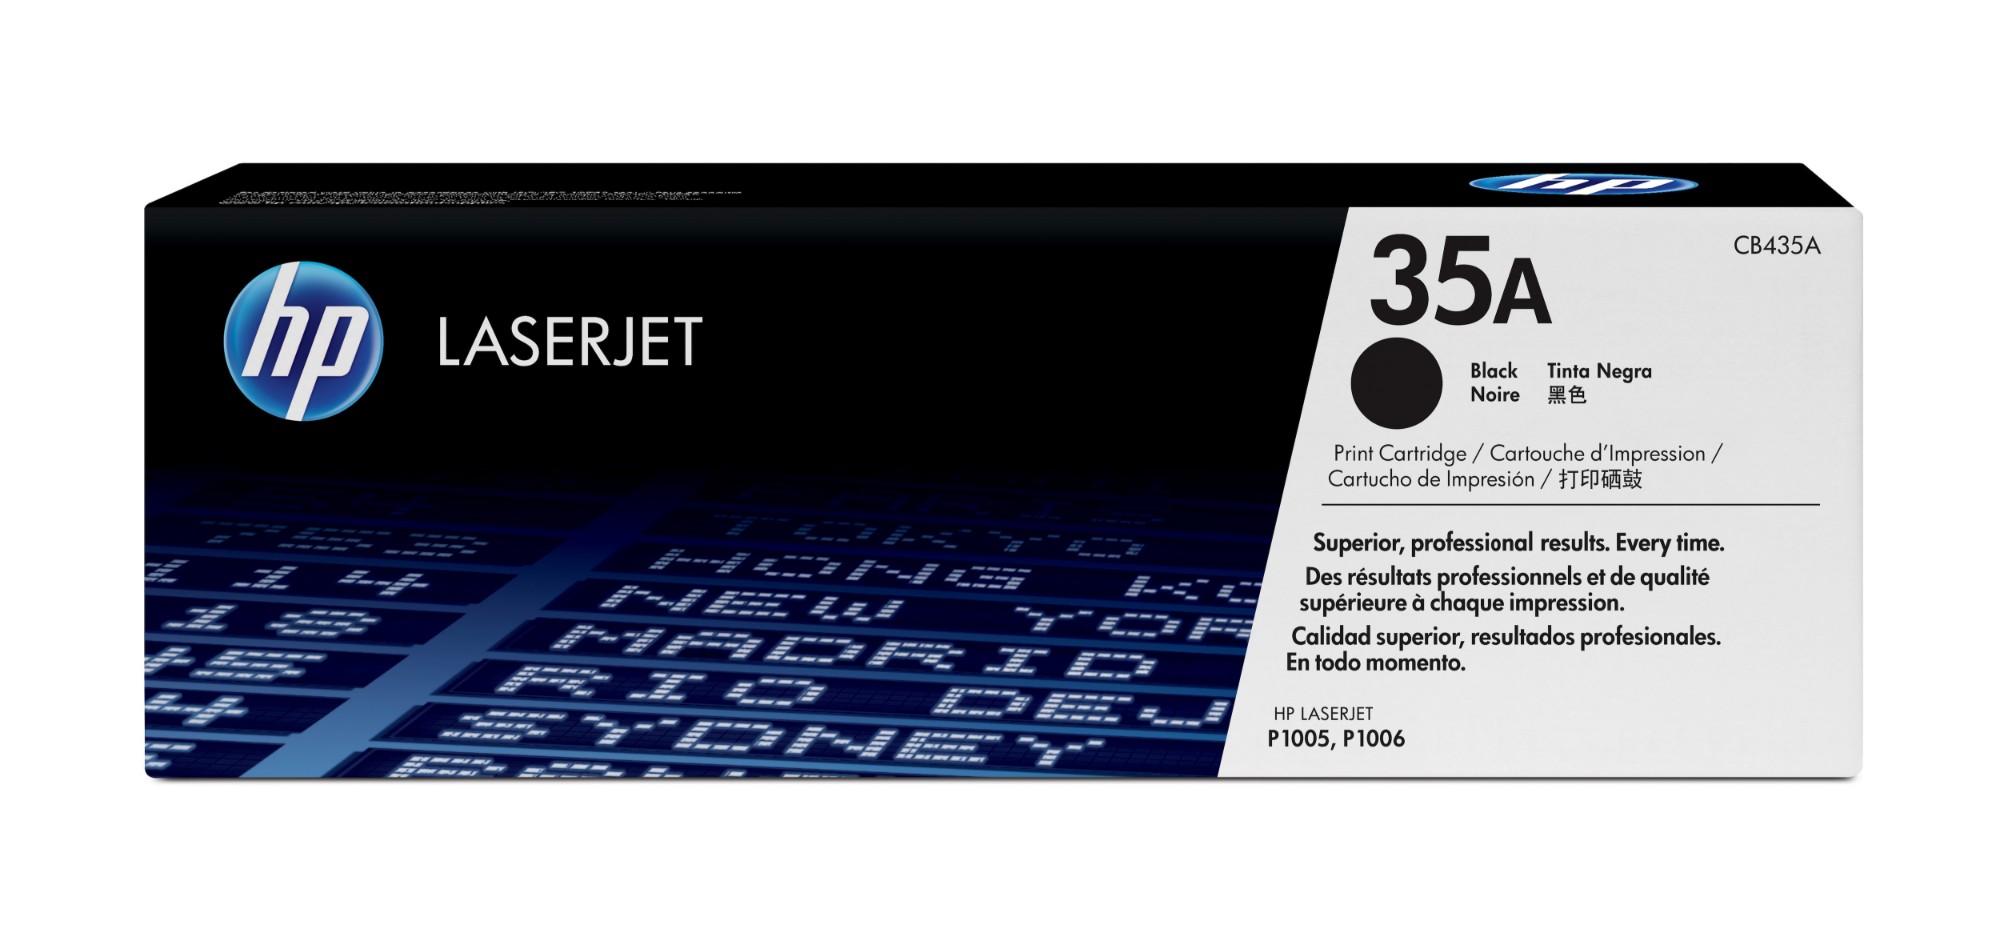 HP 35A LaserJet Toner Cartridge Black CB435A